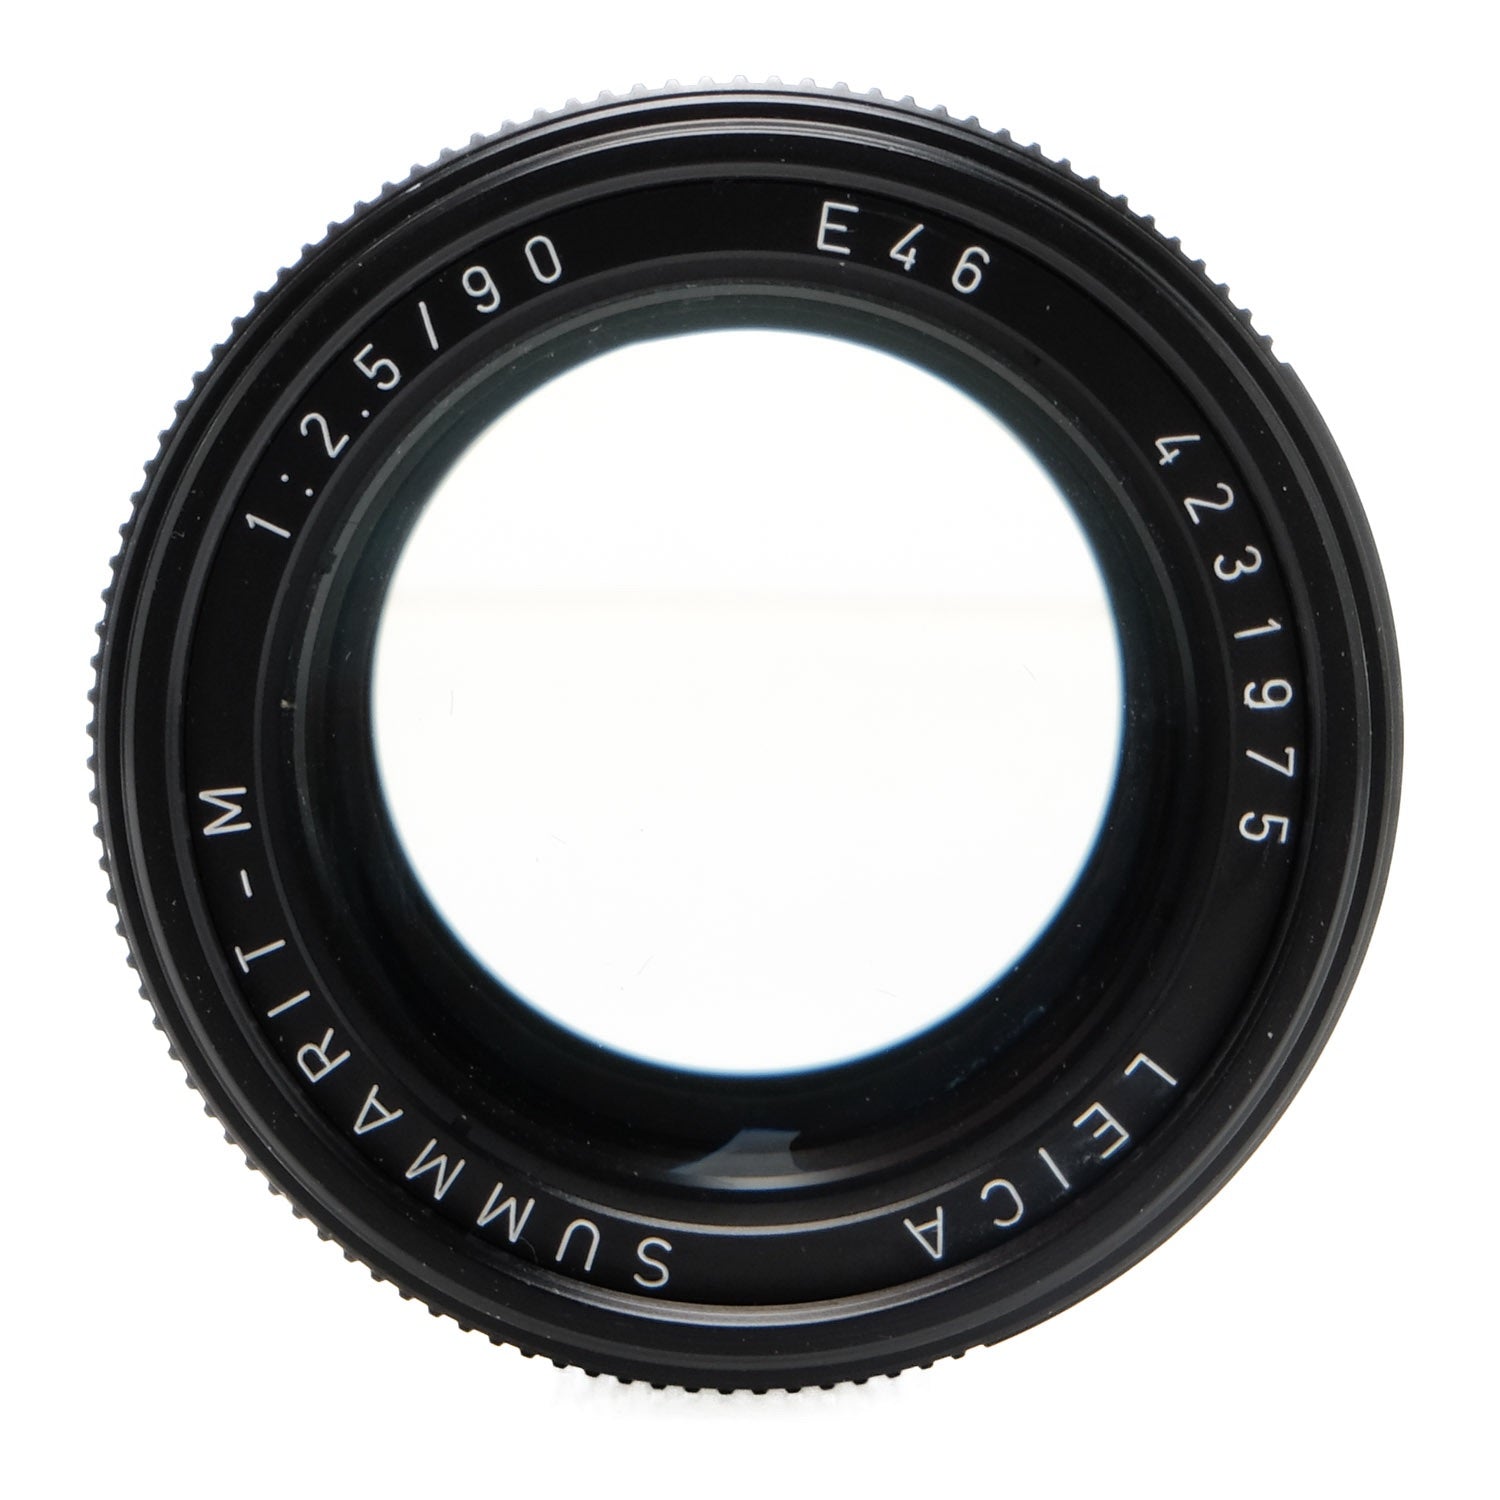 Leica 90mm f2.5 Summarit-M, Shade 4231975